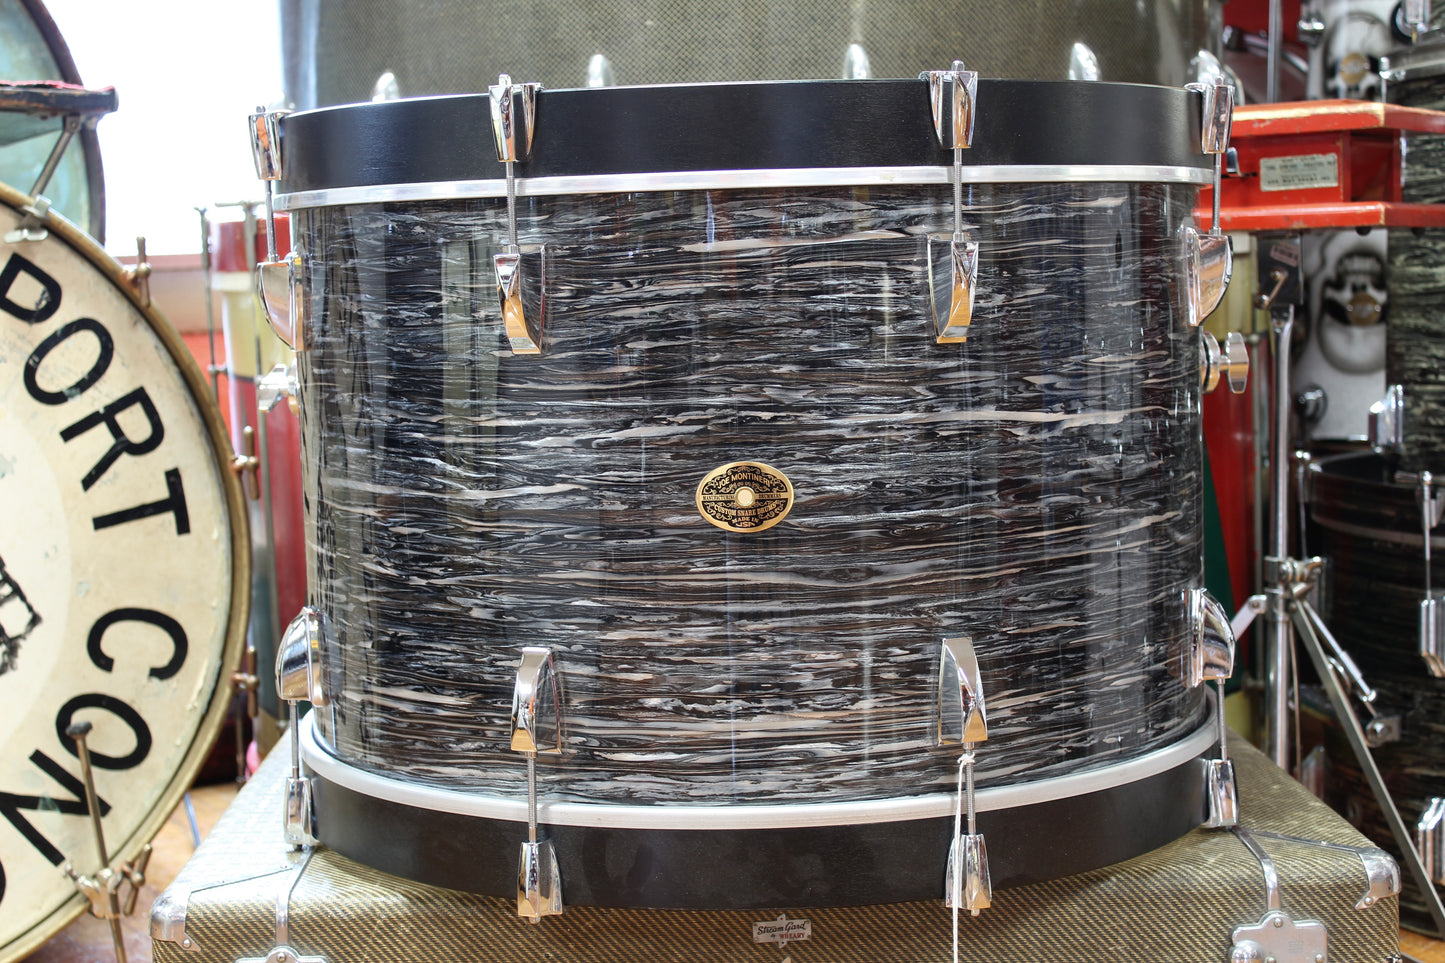 2000's Montineri Customs 14"x"24 Bass Drum in Black Oyster